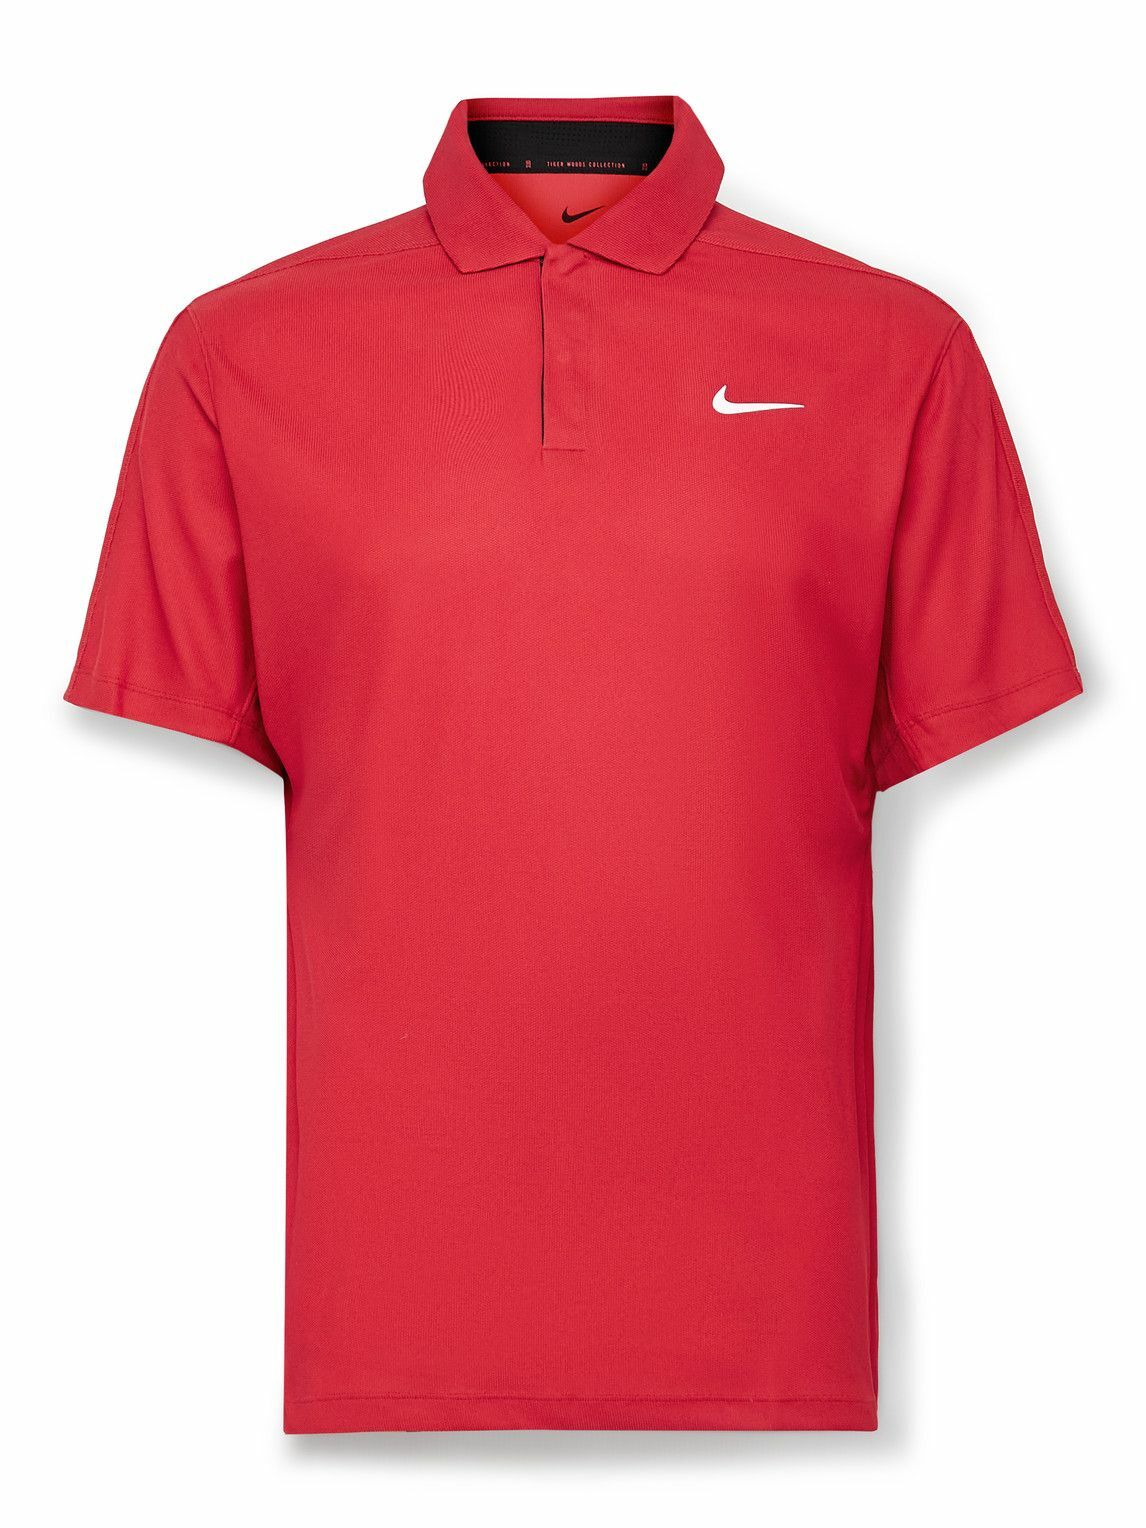 Nike Golf - Tiger Woods Dri-FIT Piqué Golf Polo Shirt - Red Nike Golf